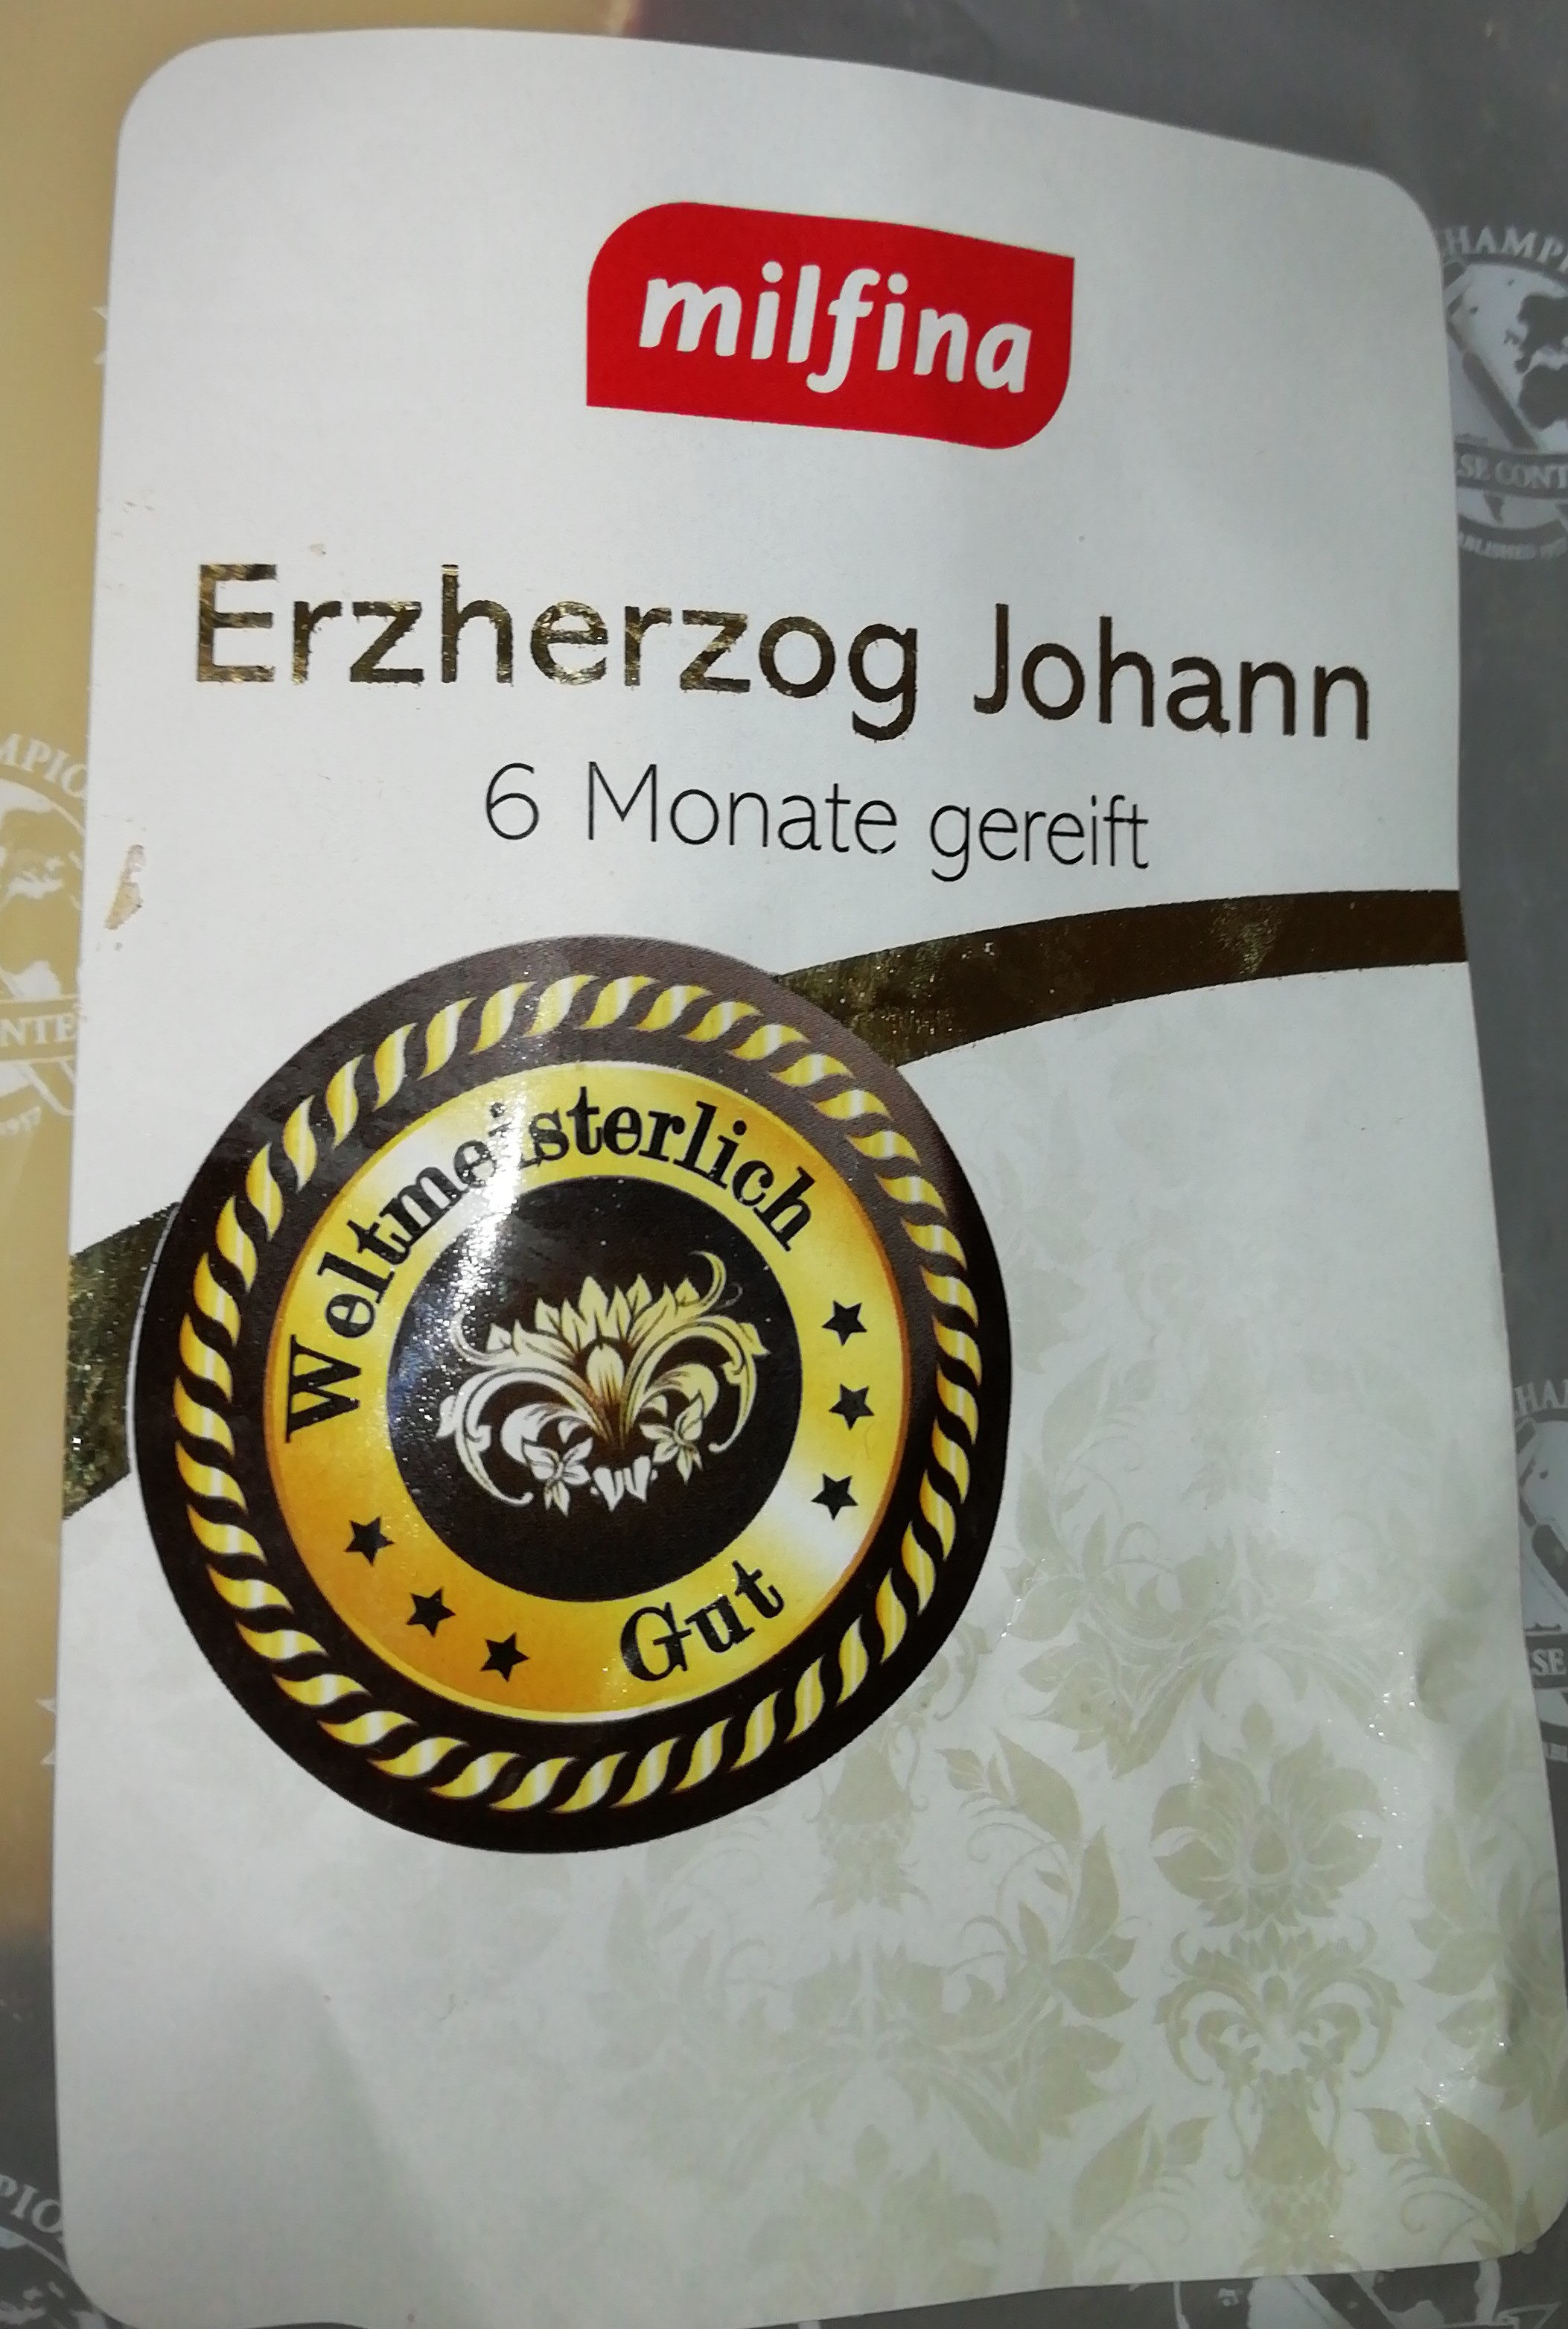 Erzherzog Johann - Product - fr